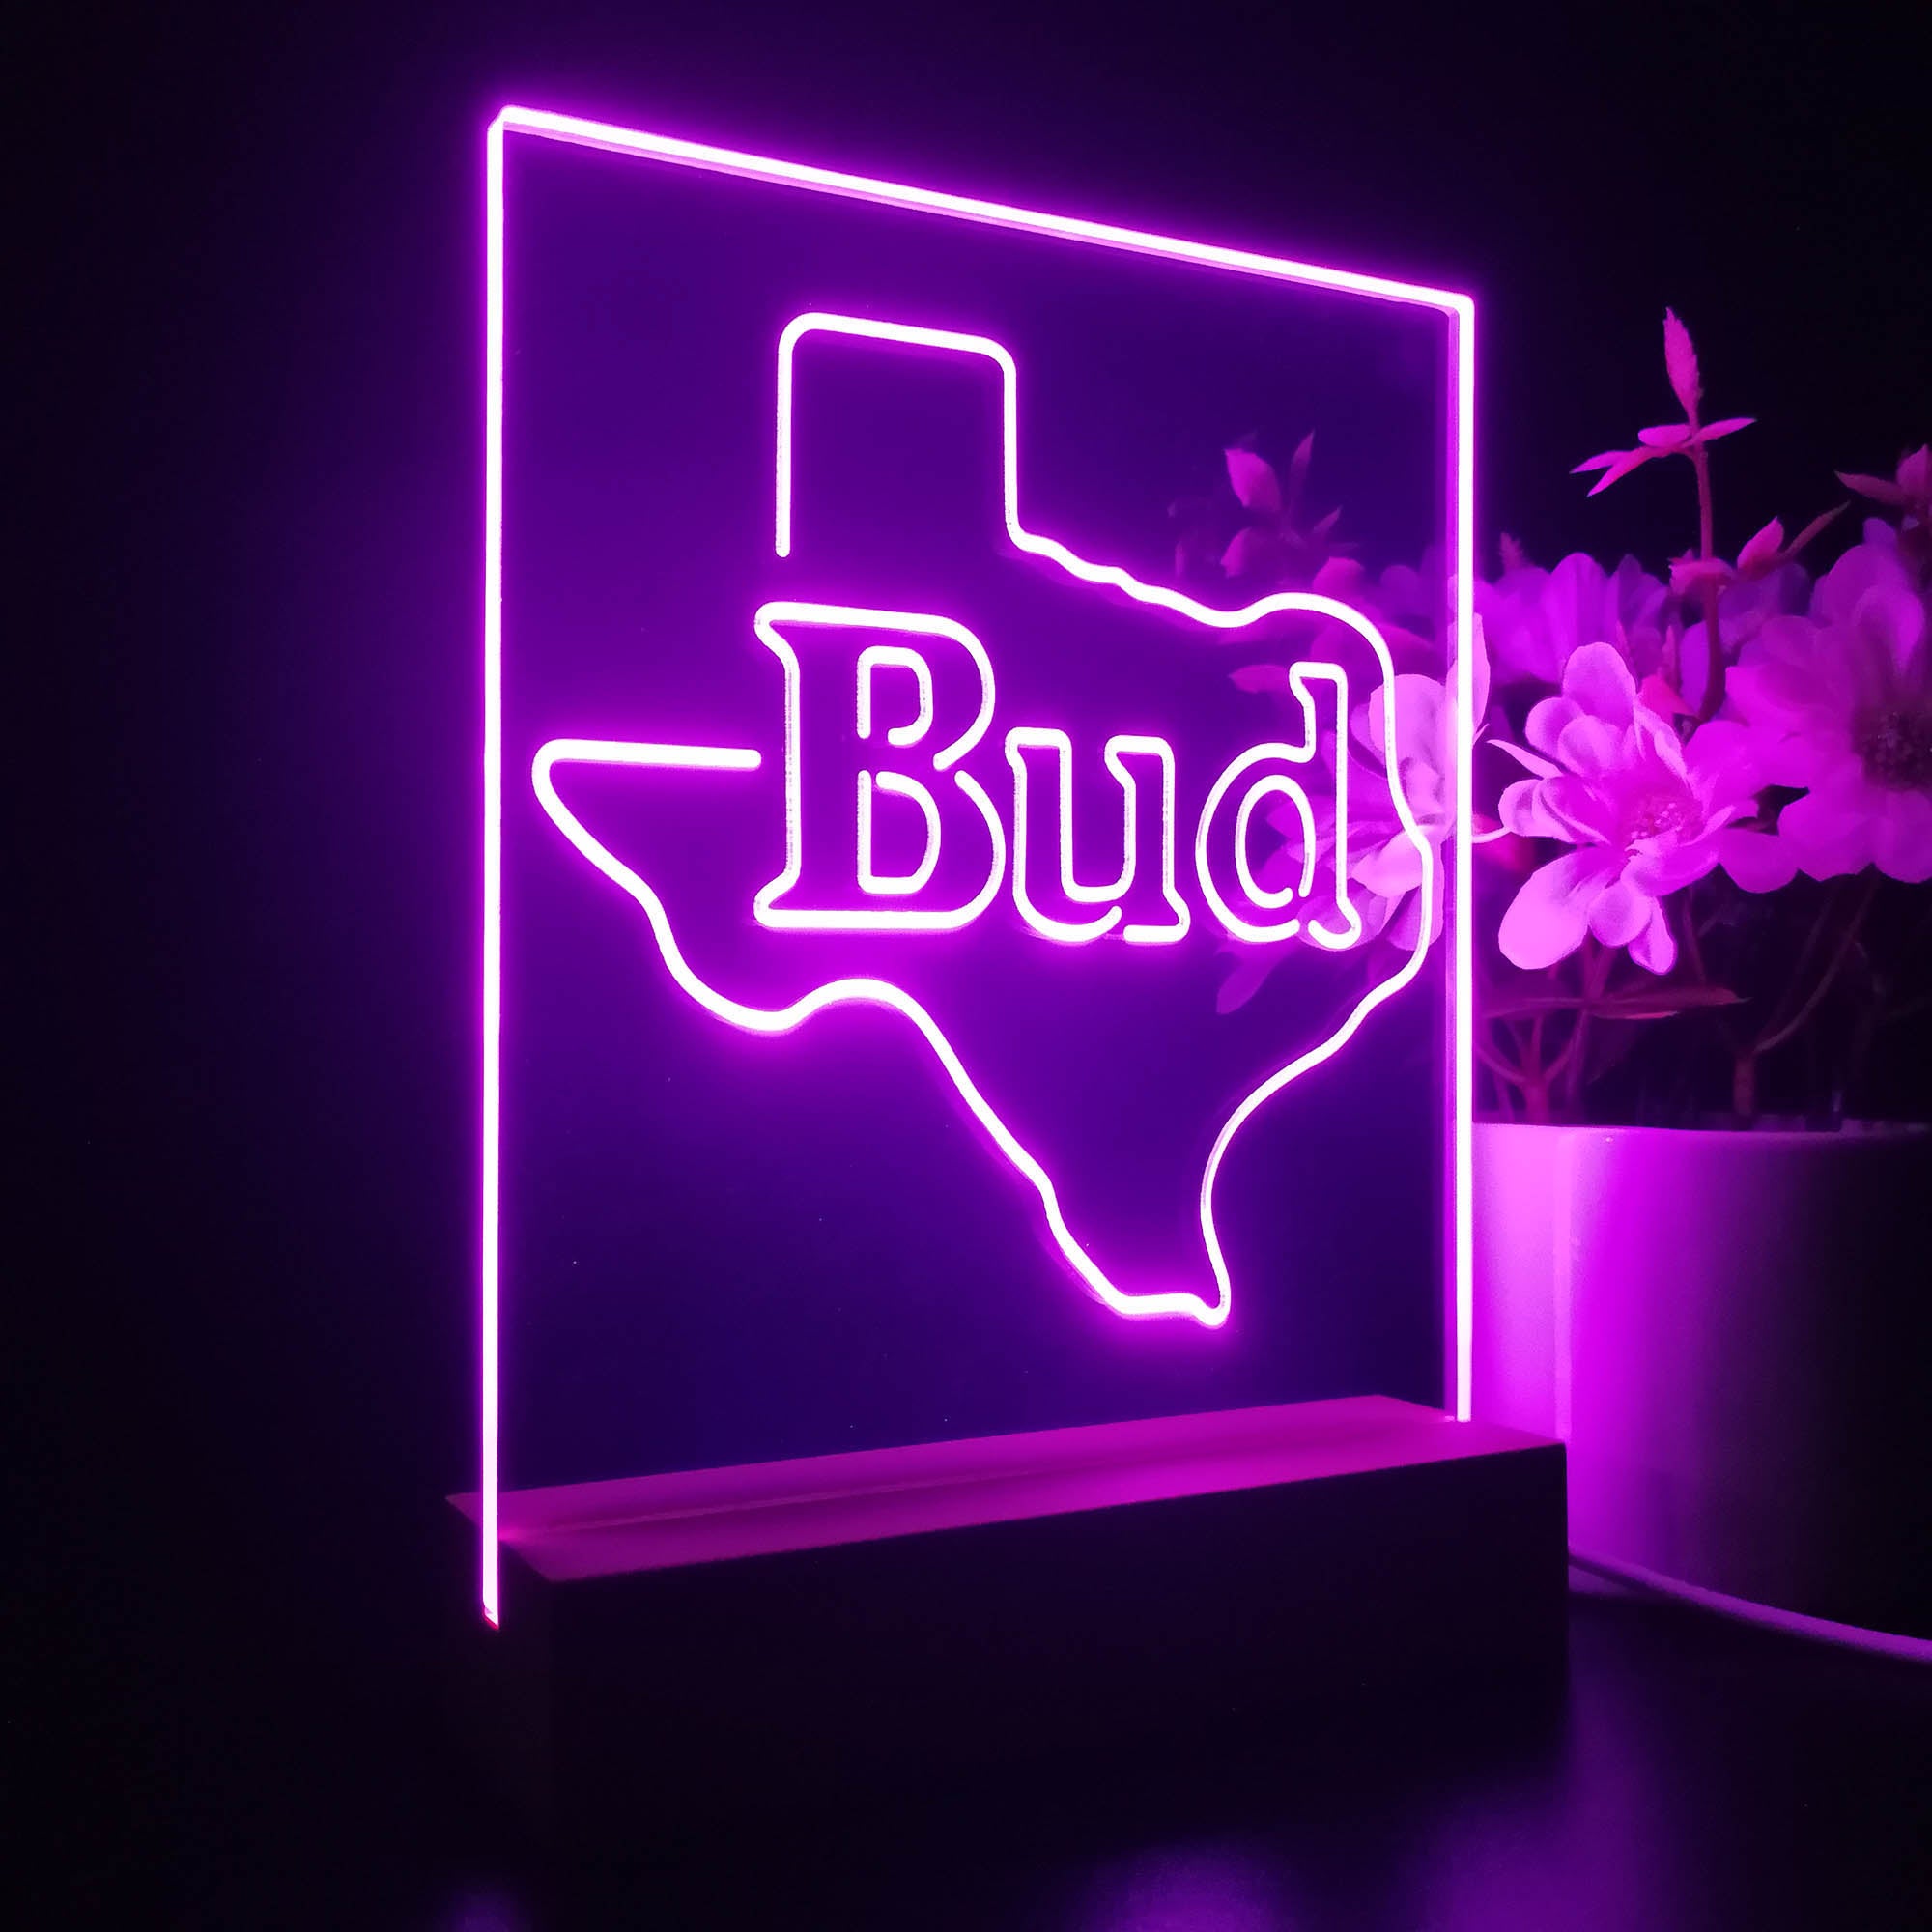 Bud Texsa Night Light LED Sign